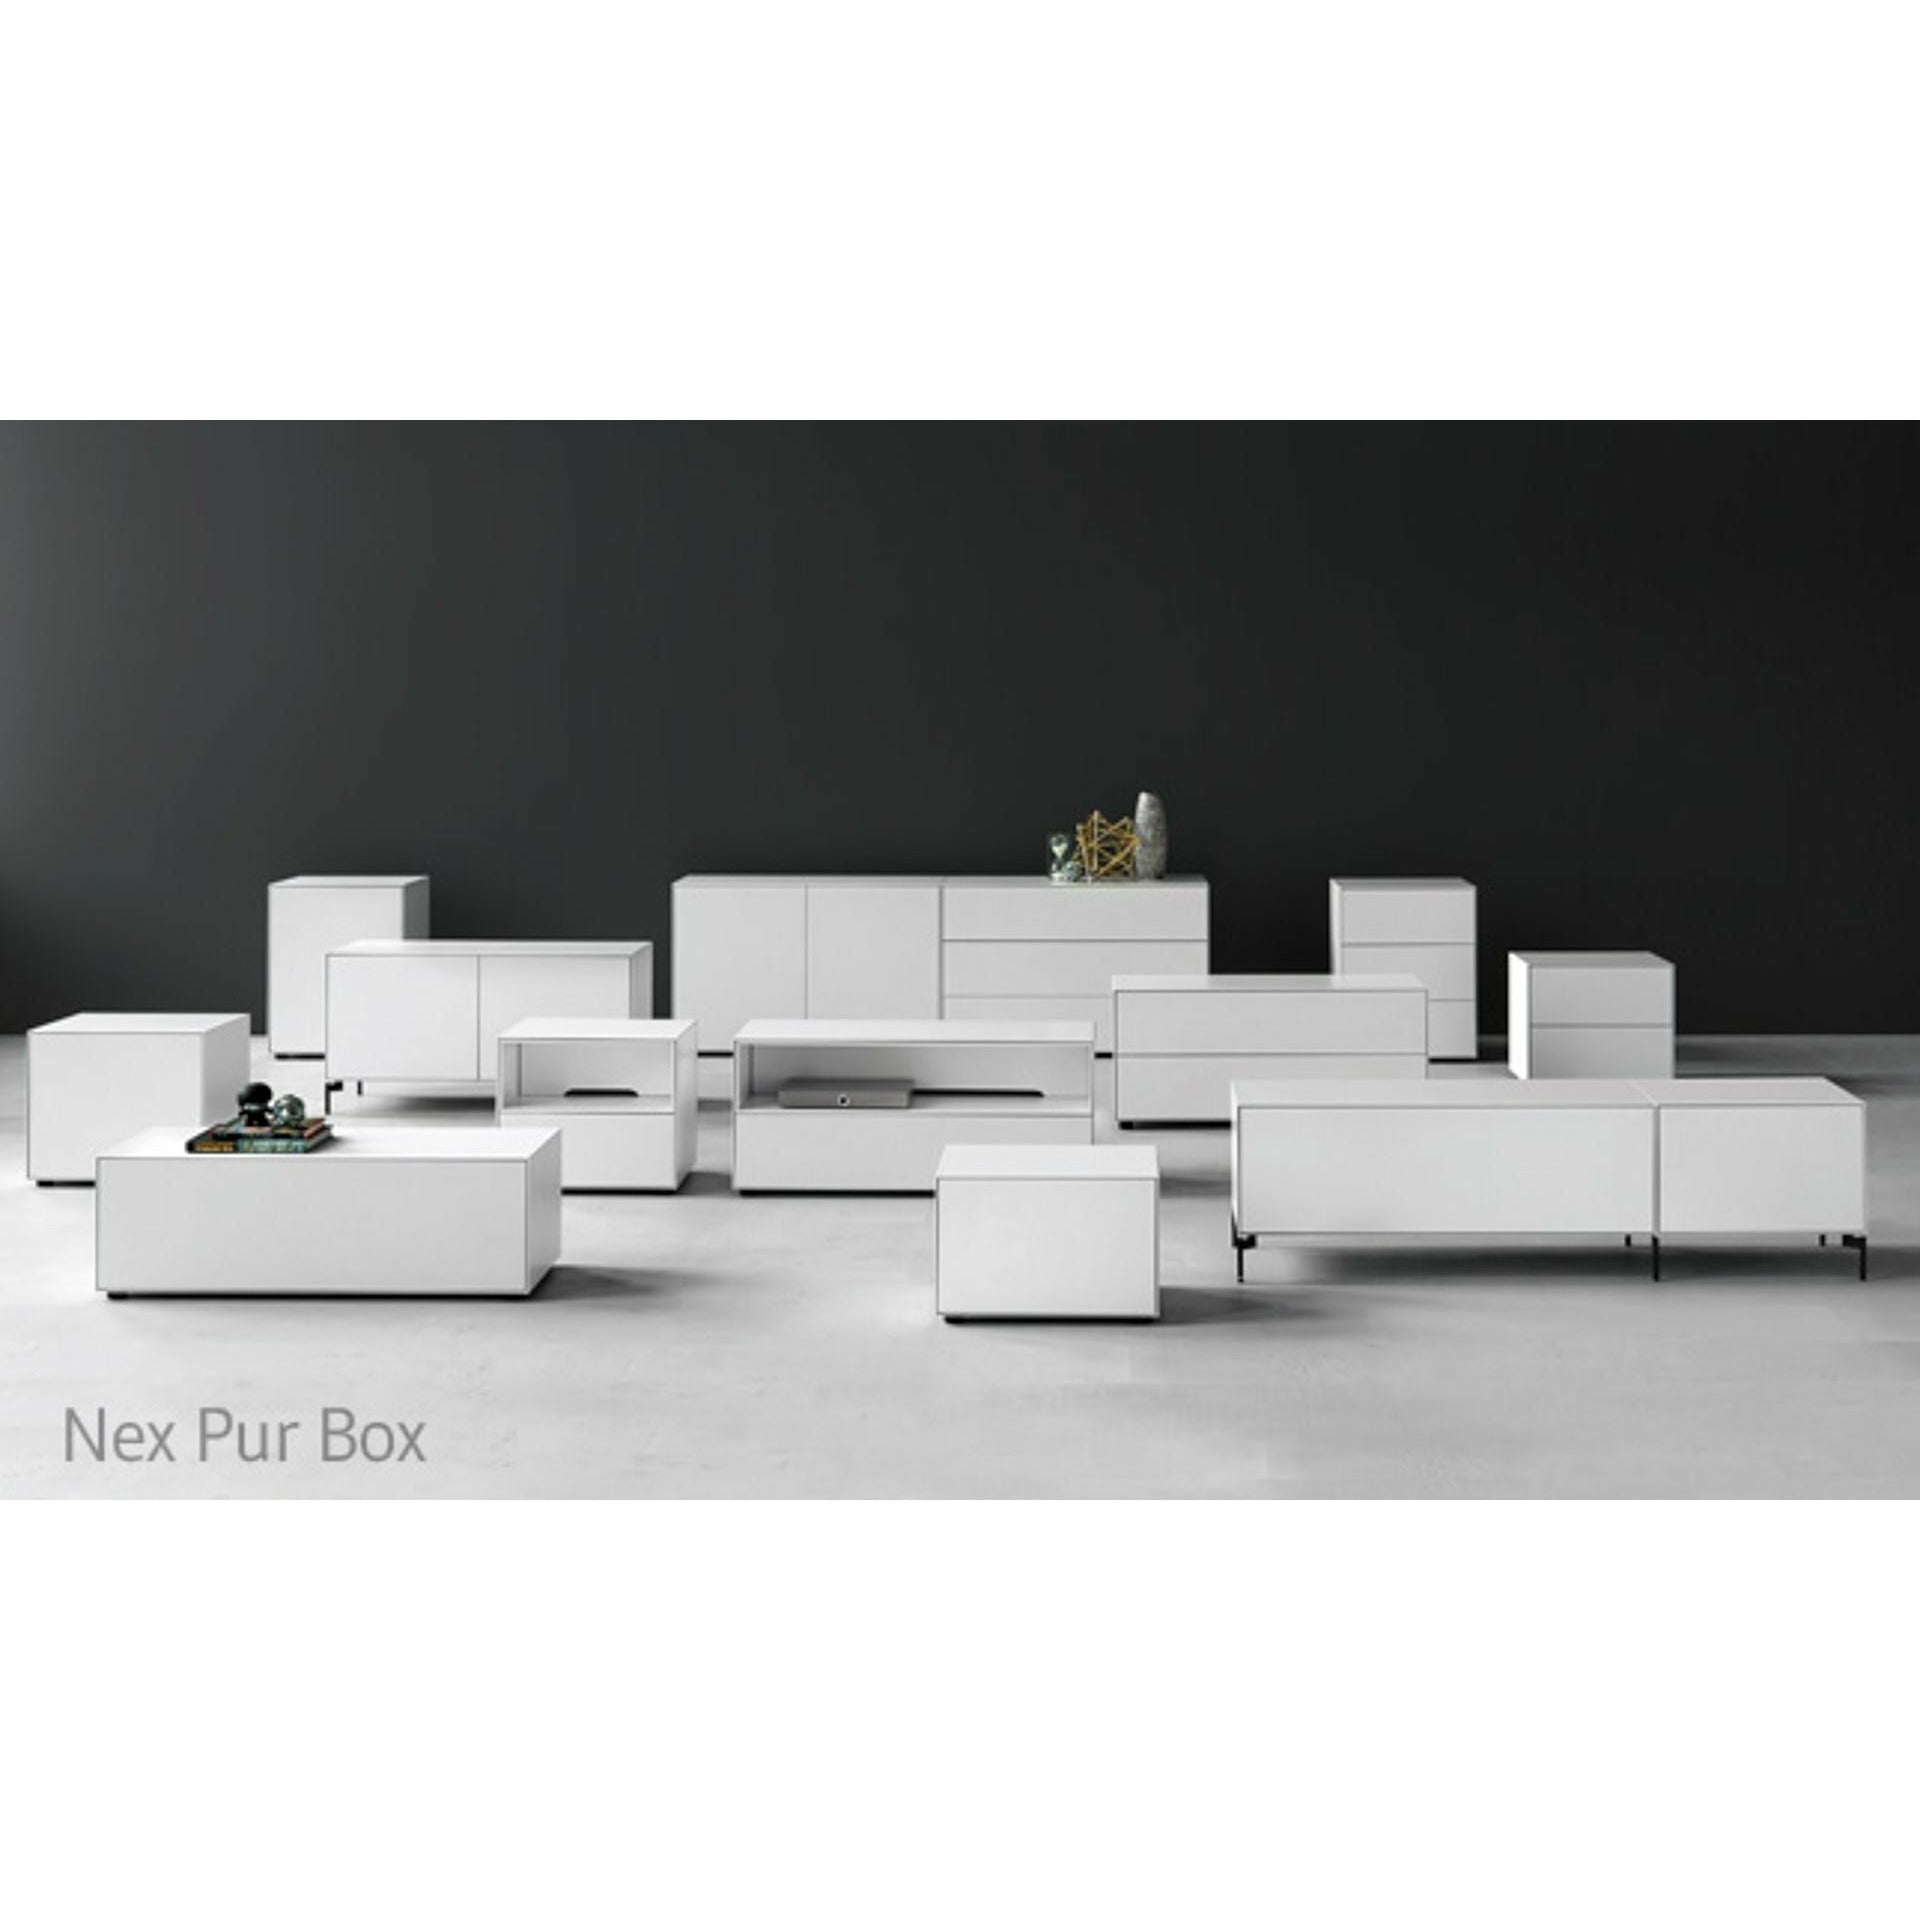 Piure Nex Pur Box Media Flap Hx W 37,5x120 cm, 1 estante